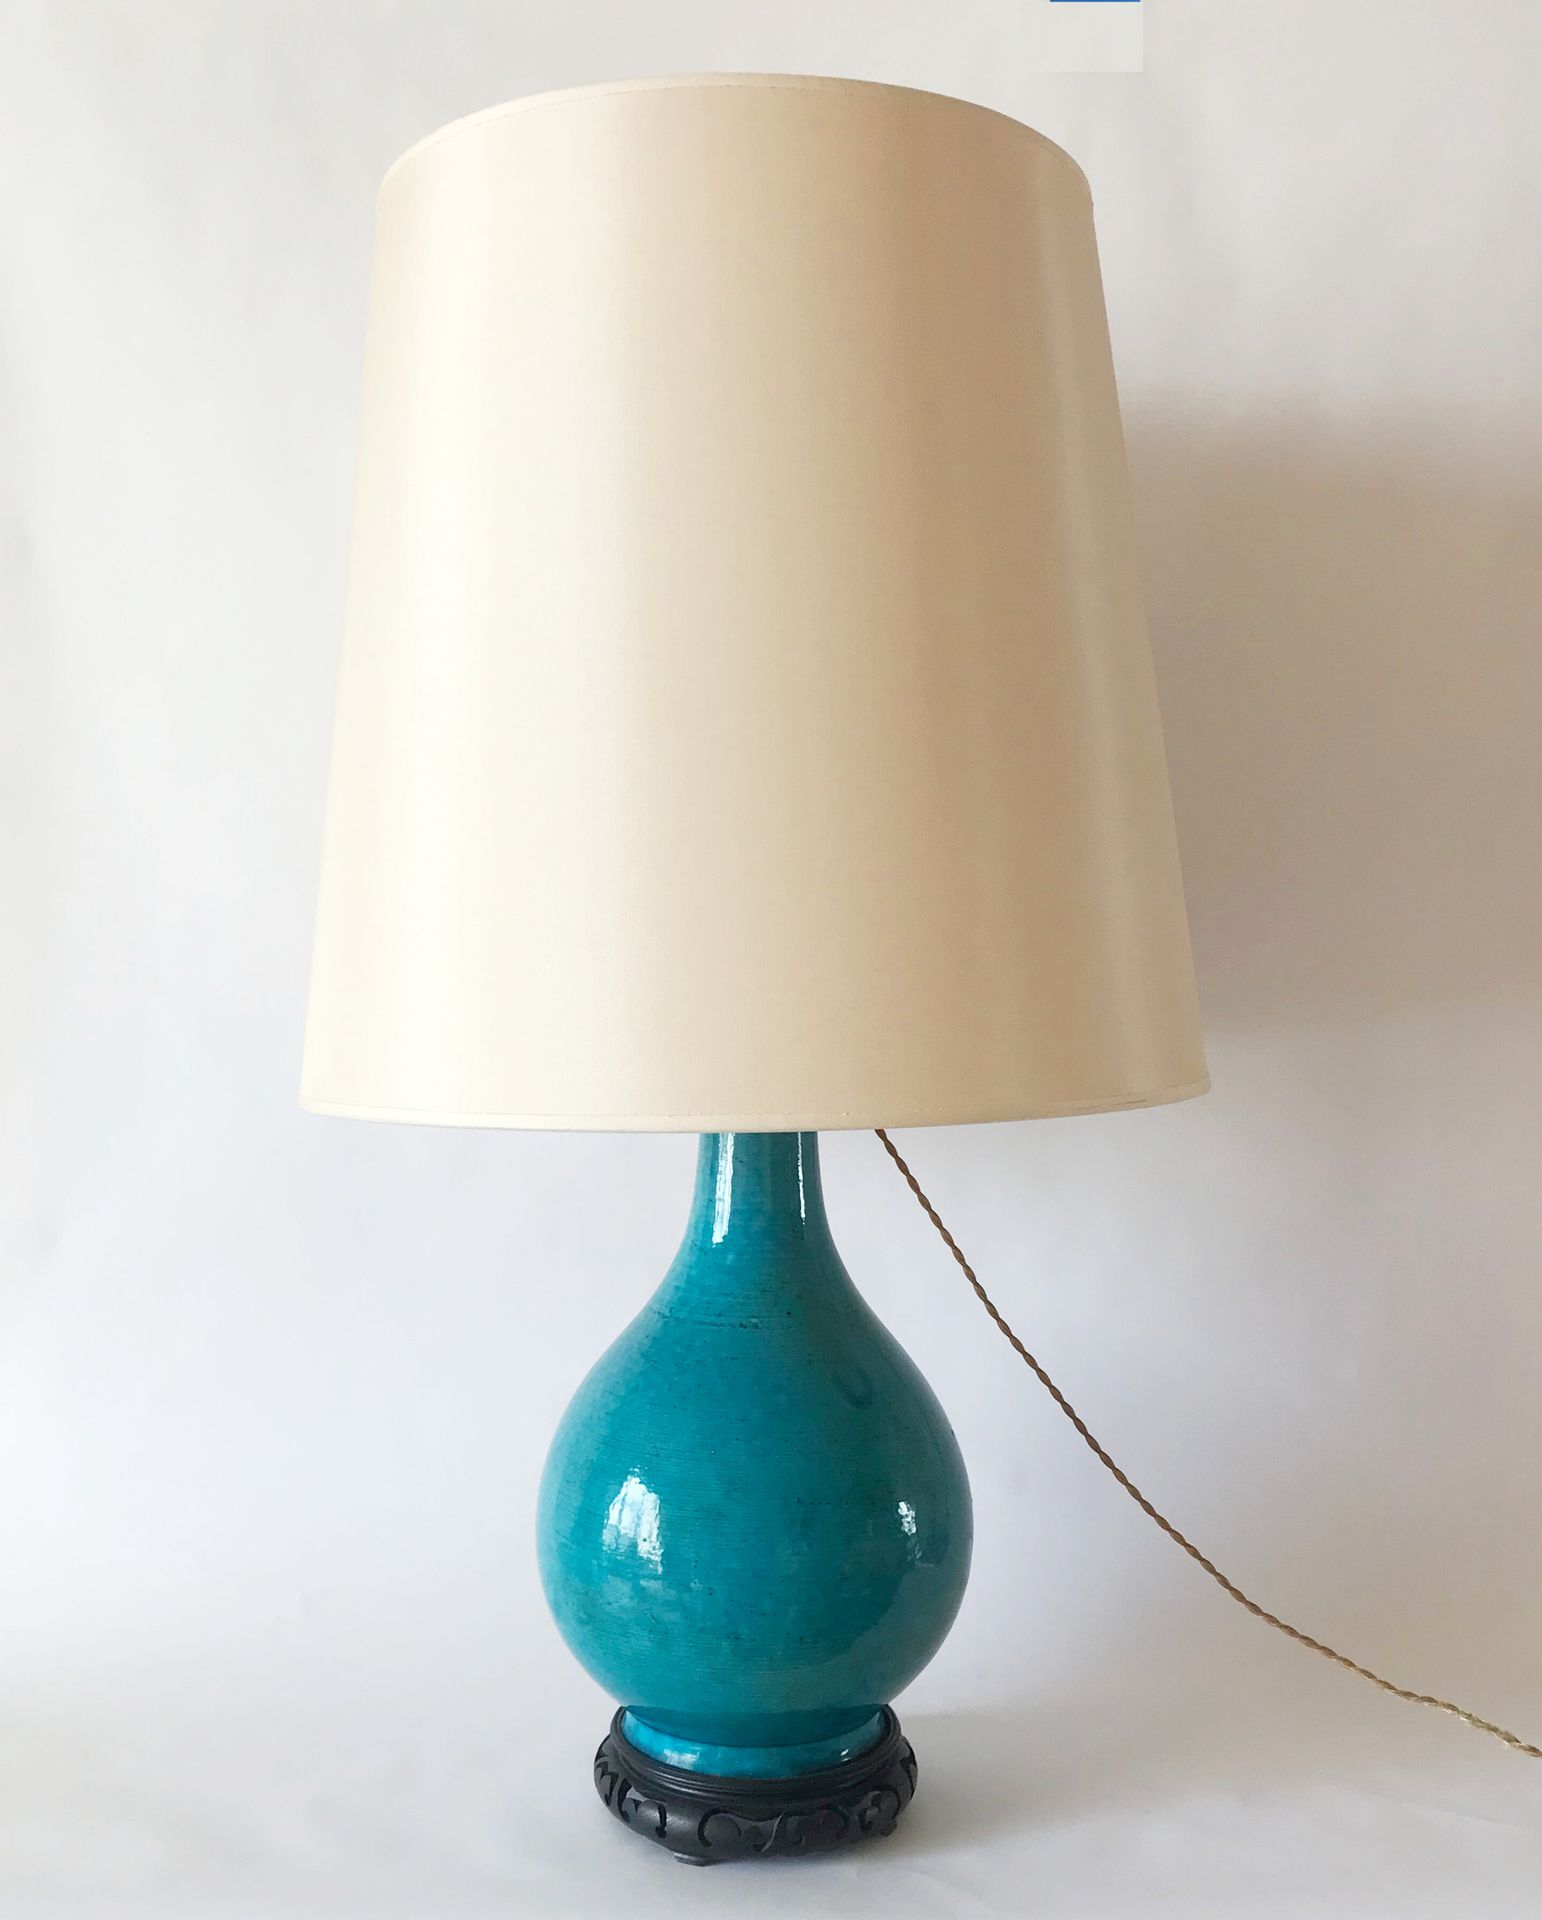 CHINE 中国

蓝色釉面陶瓷瓶形花瓶

安装和灯

木质底座

H.37厘米